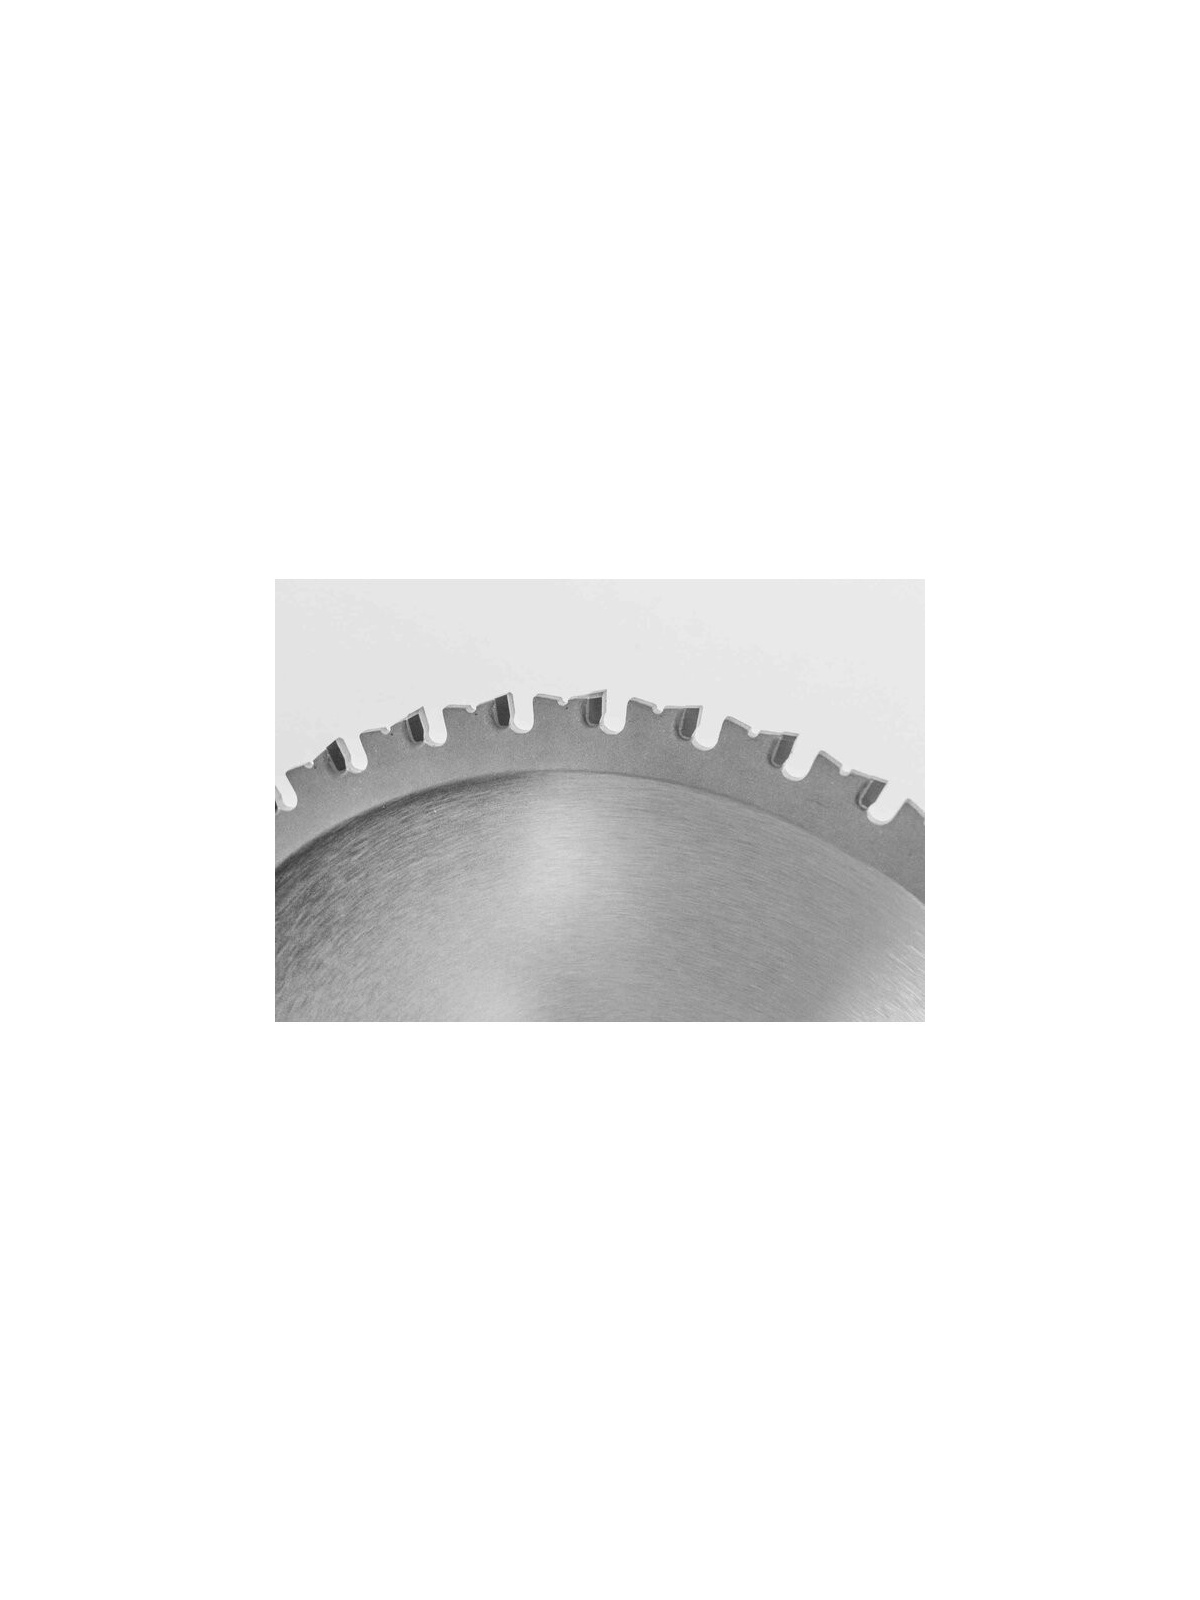 Stark TCT Circular saw blade for DRY-CUT 200x2.2x 30 mm Z40 | JVL-Europe